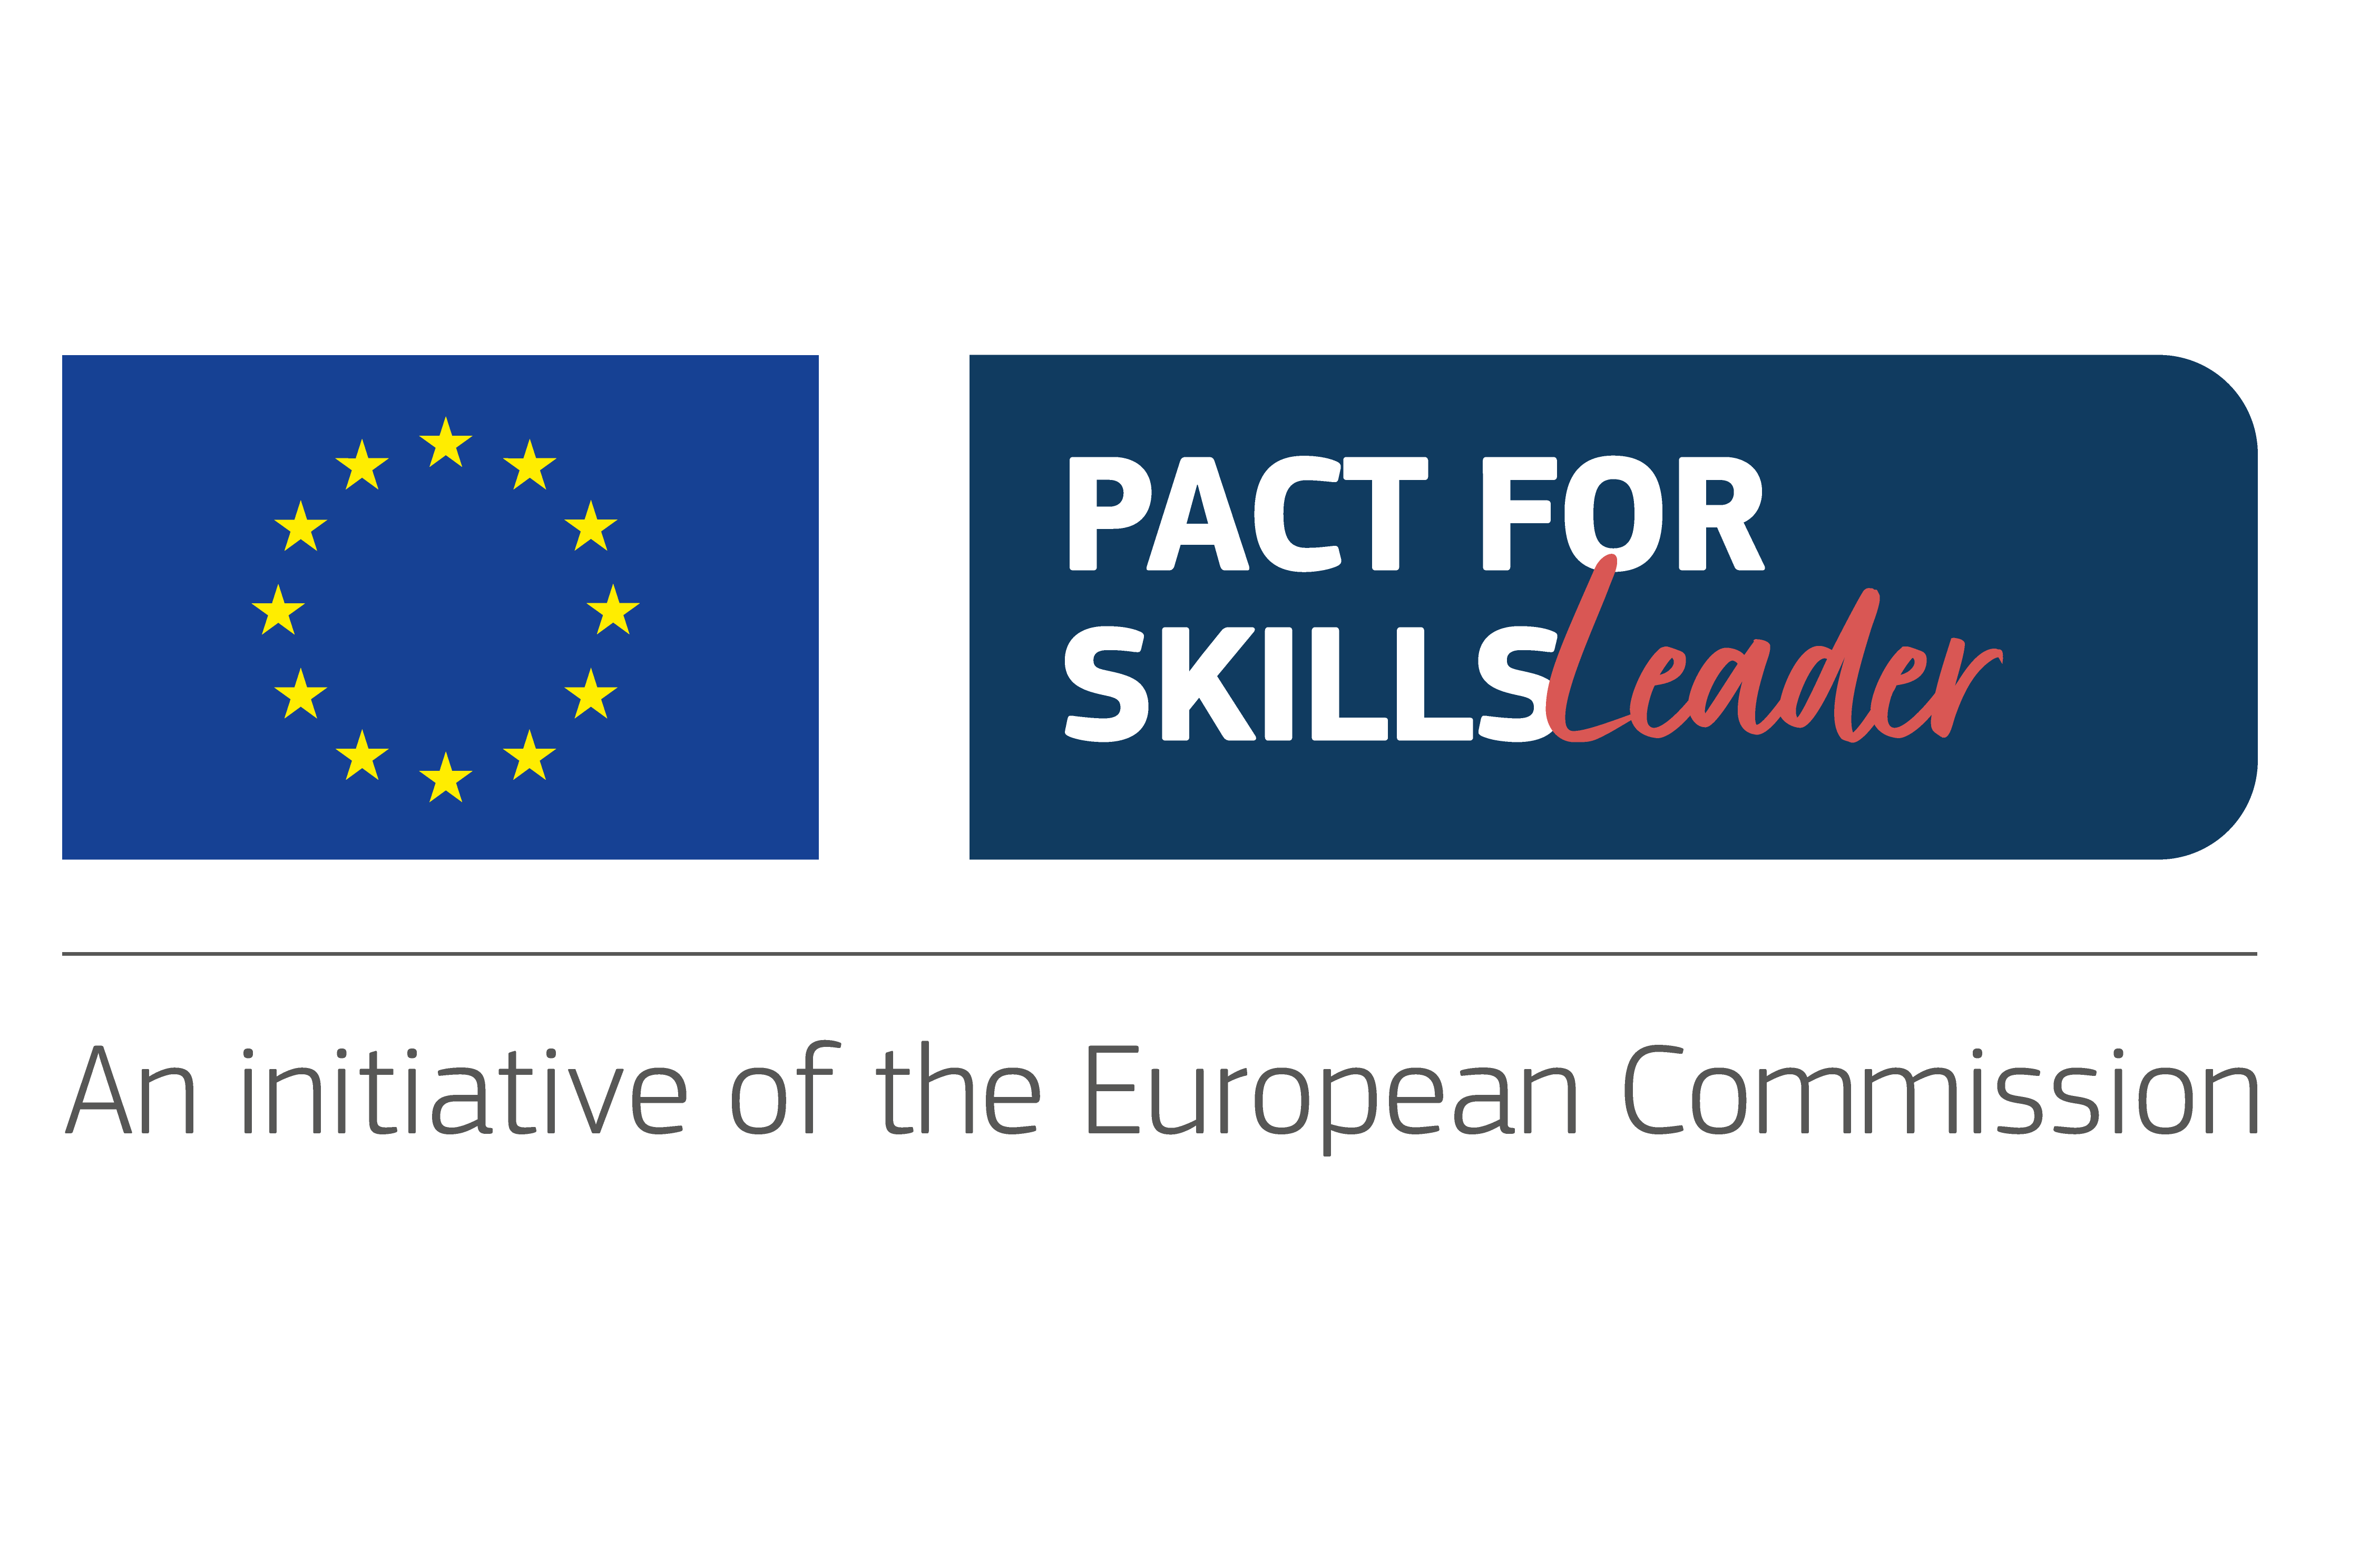 Data Corner joined the Pact for Skills program of European Commission